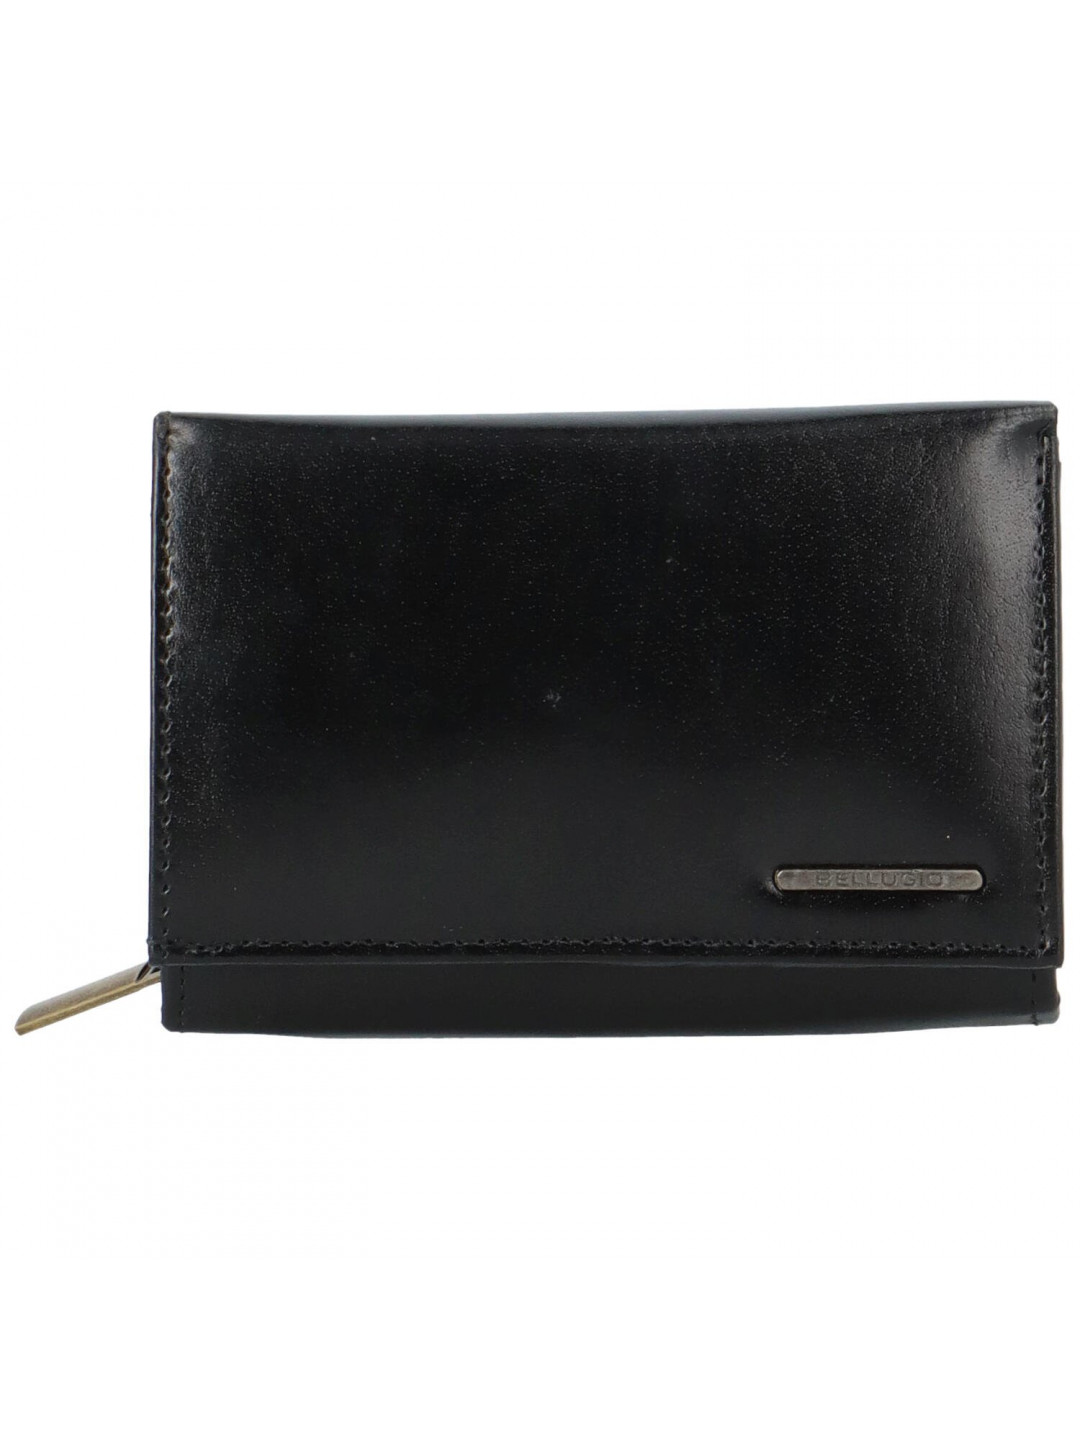 Dámská kožená peněženka černá – Bellugio Milada